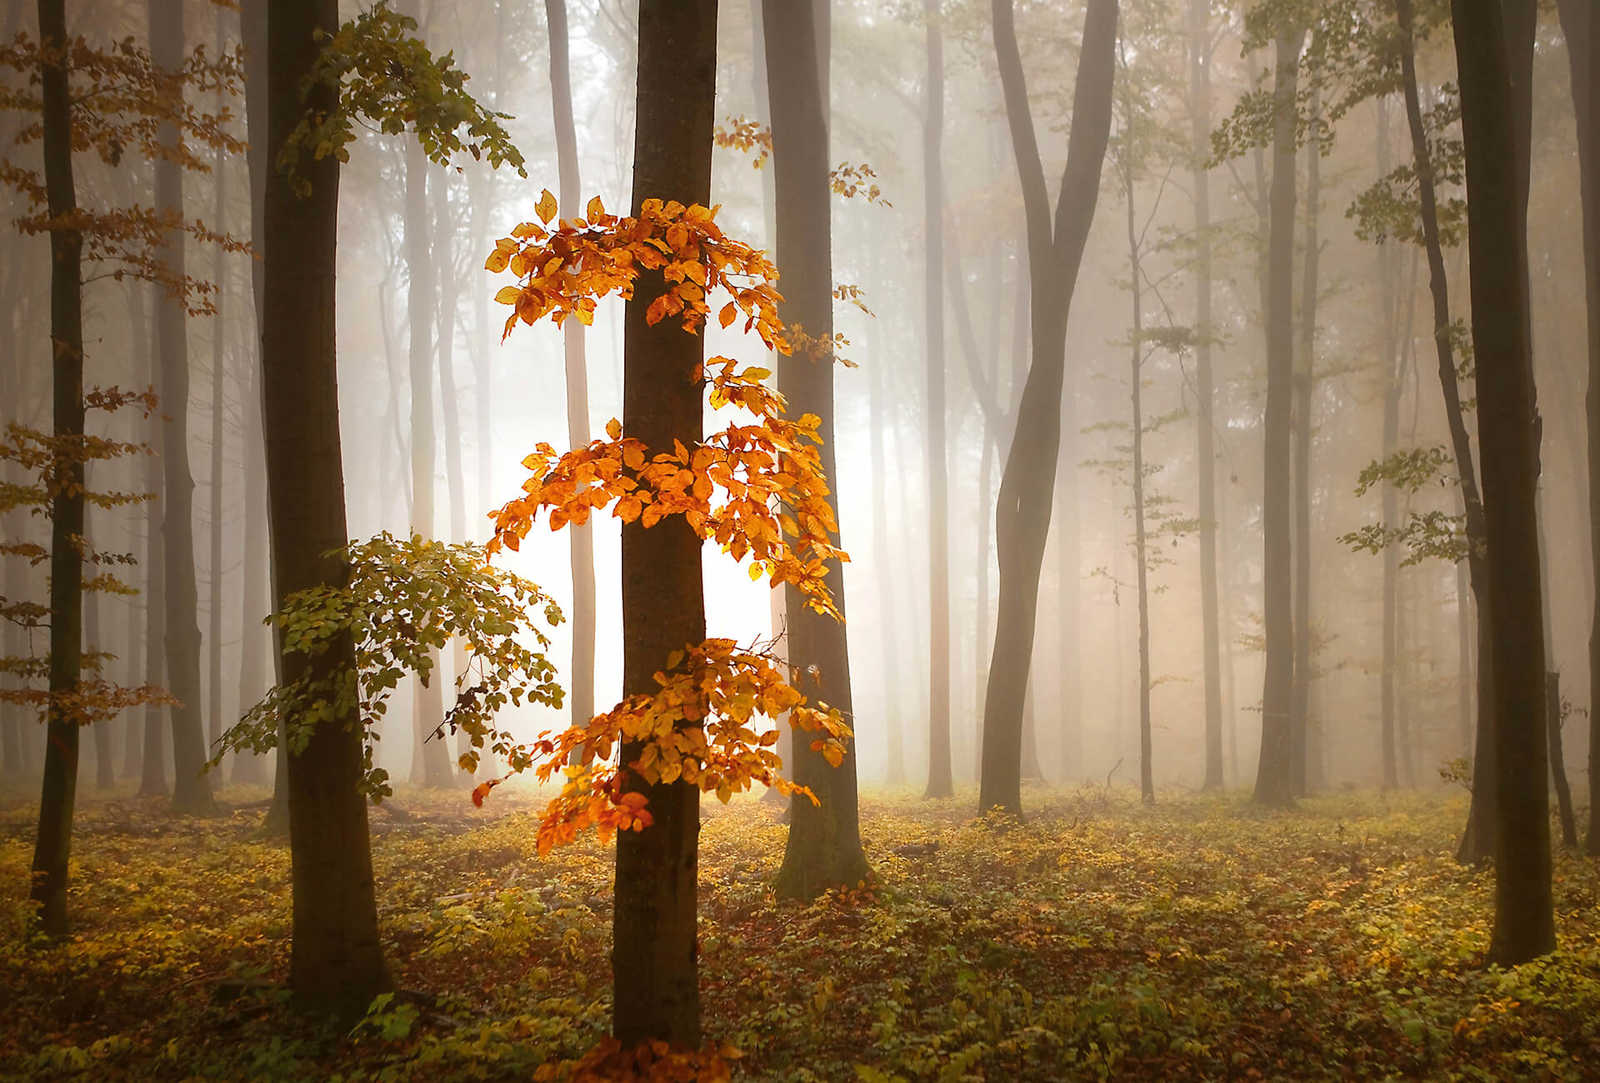 Photo wallpaper forest in autumn with fog - orange, brown
